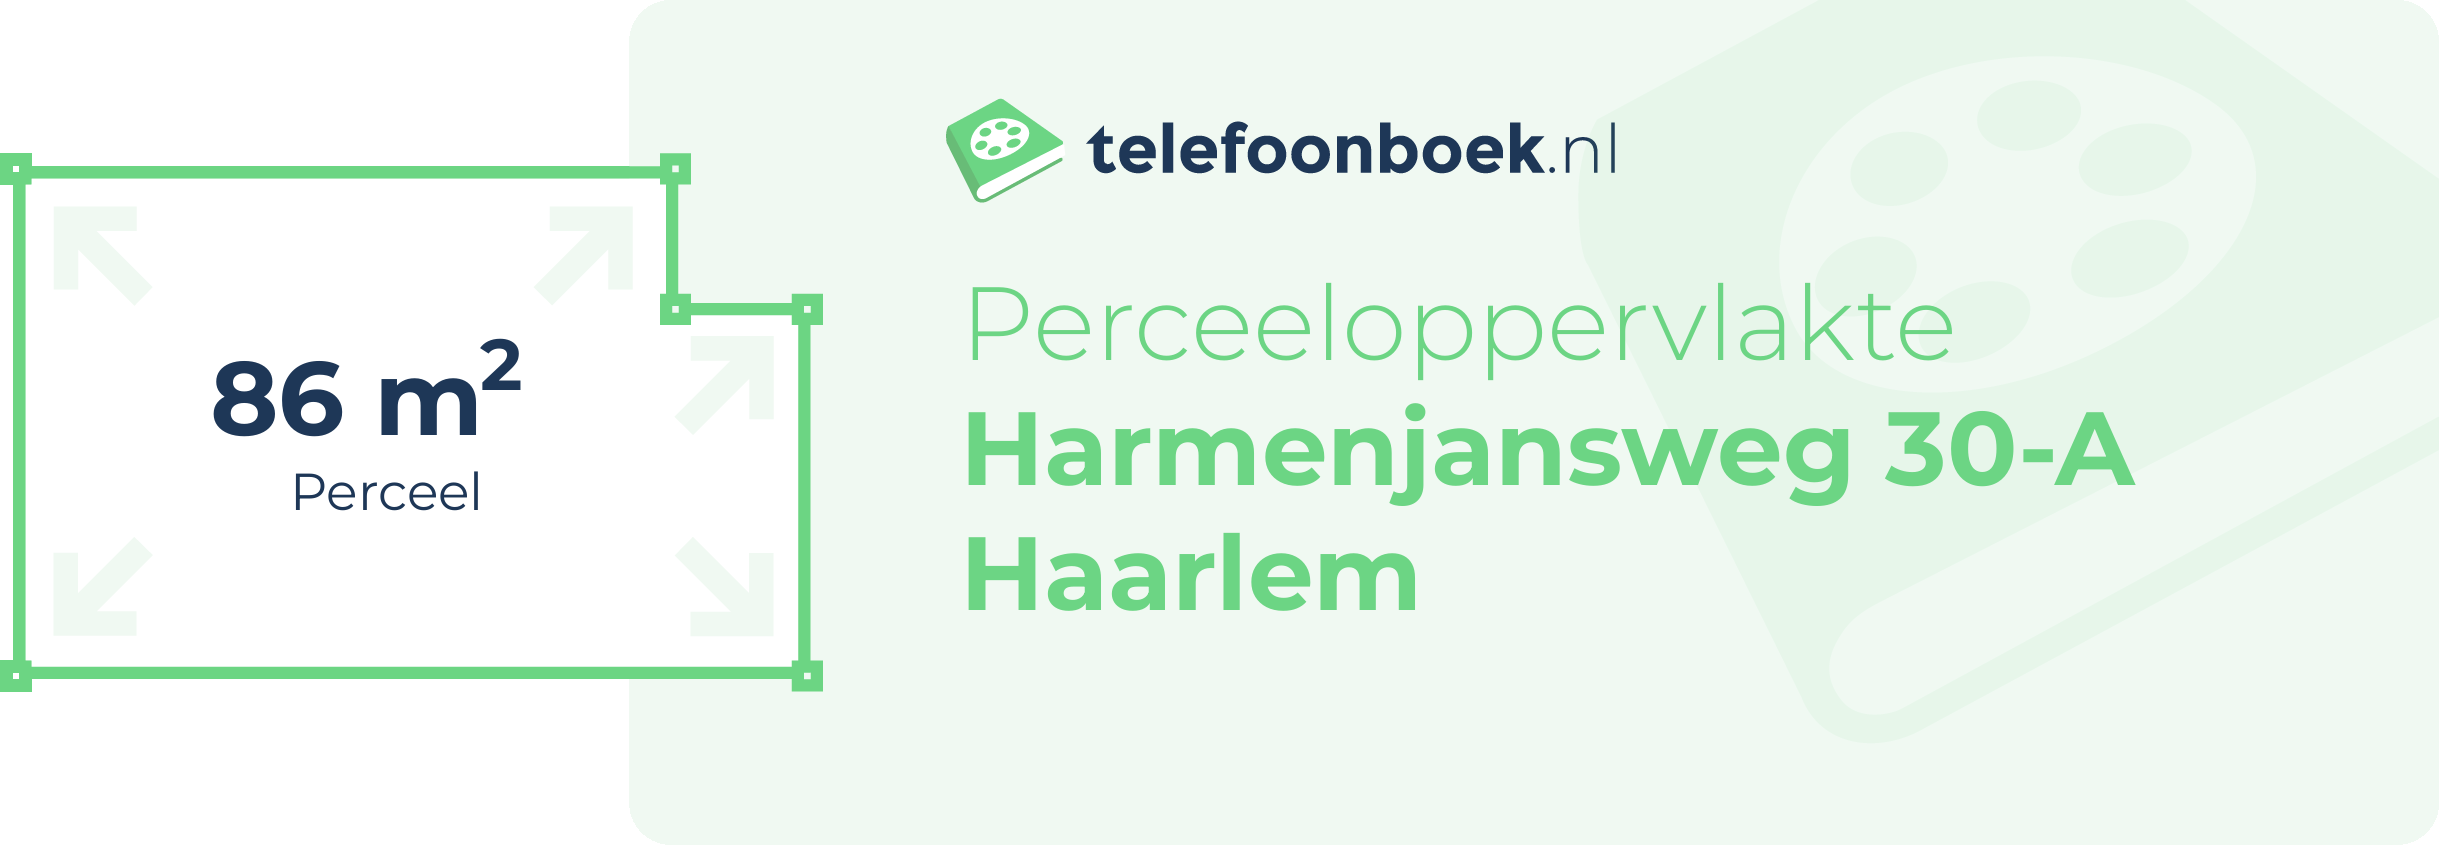 Perceeloppervlakte Harmenjansweg 30-A Haarlem